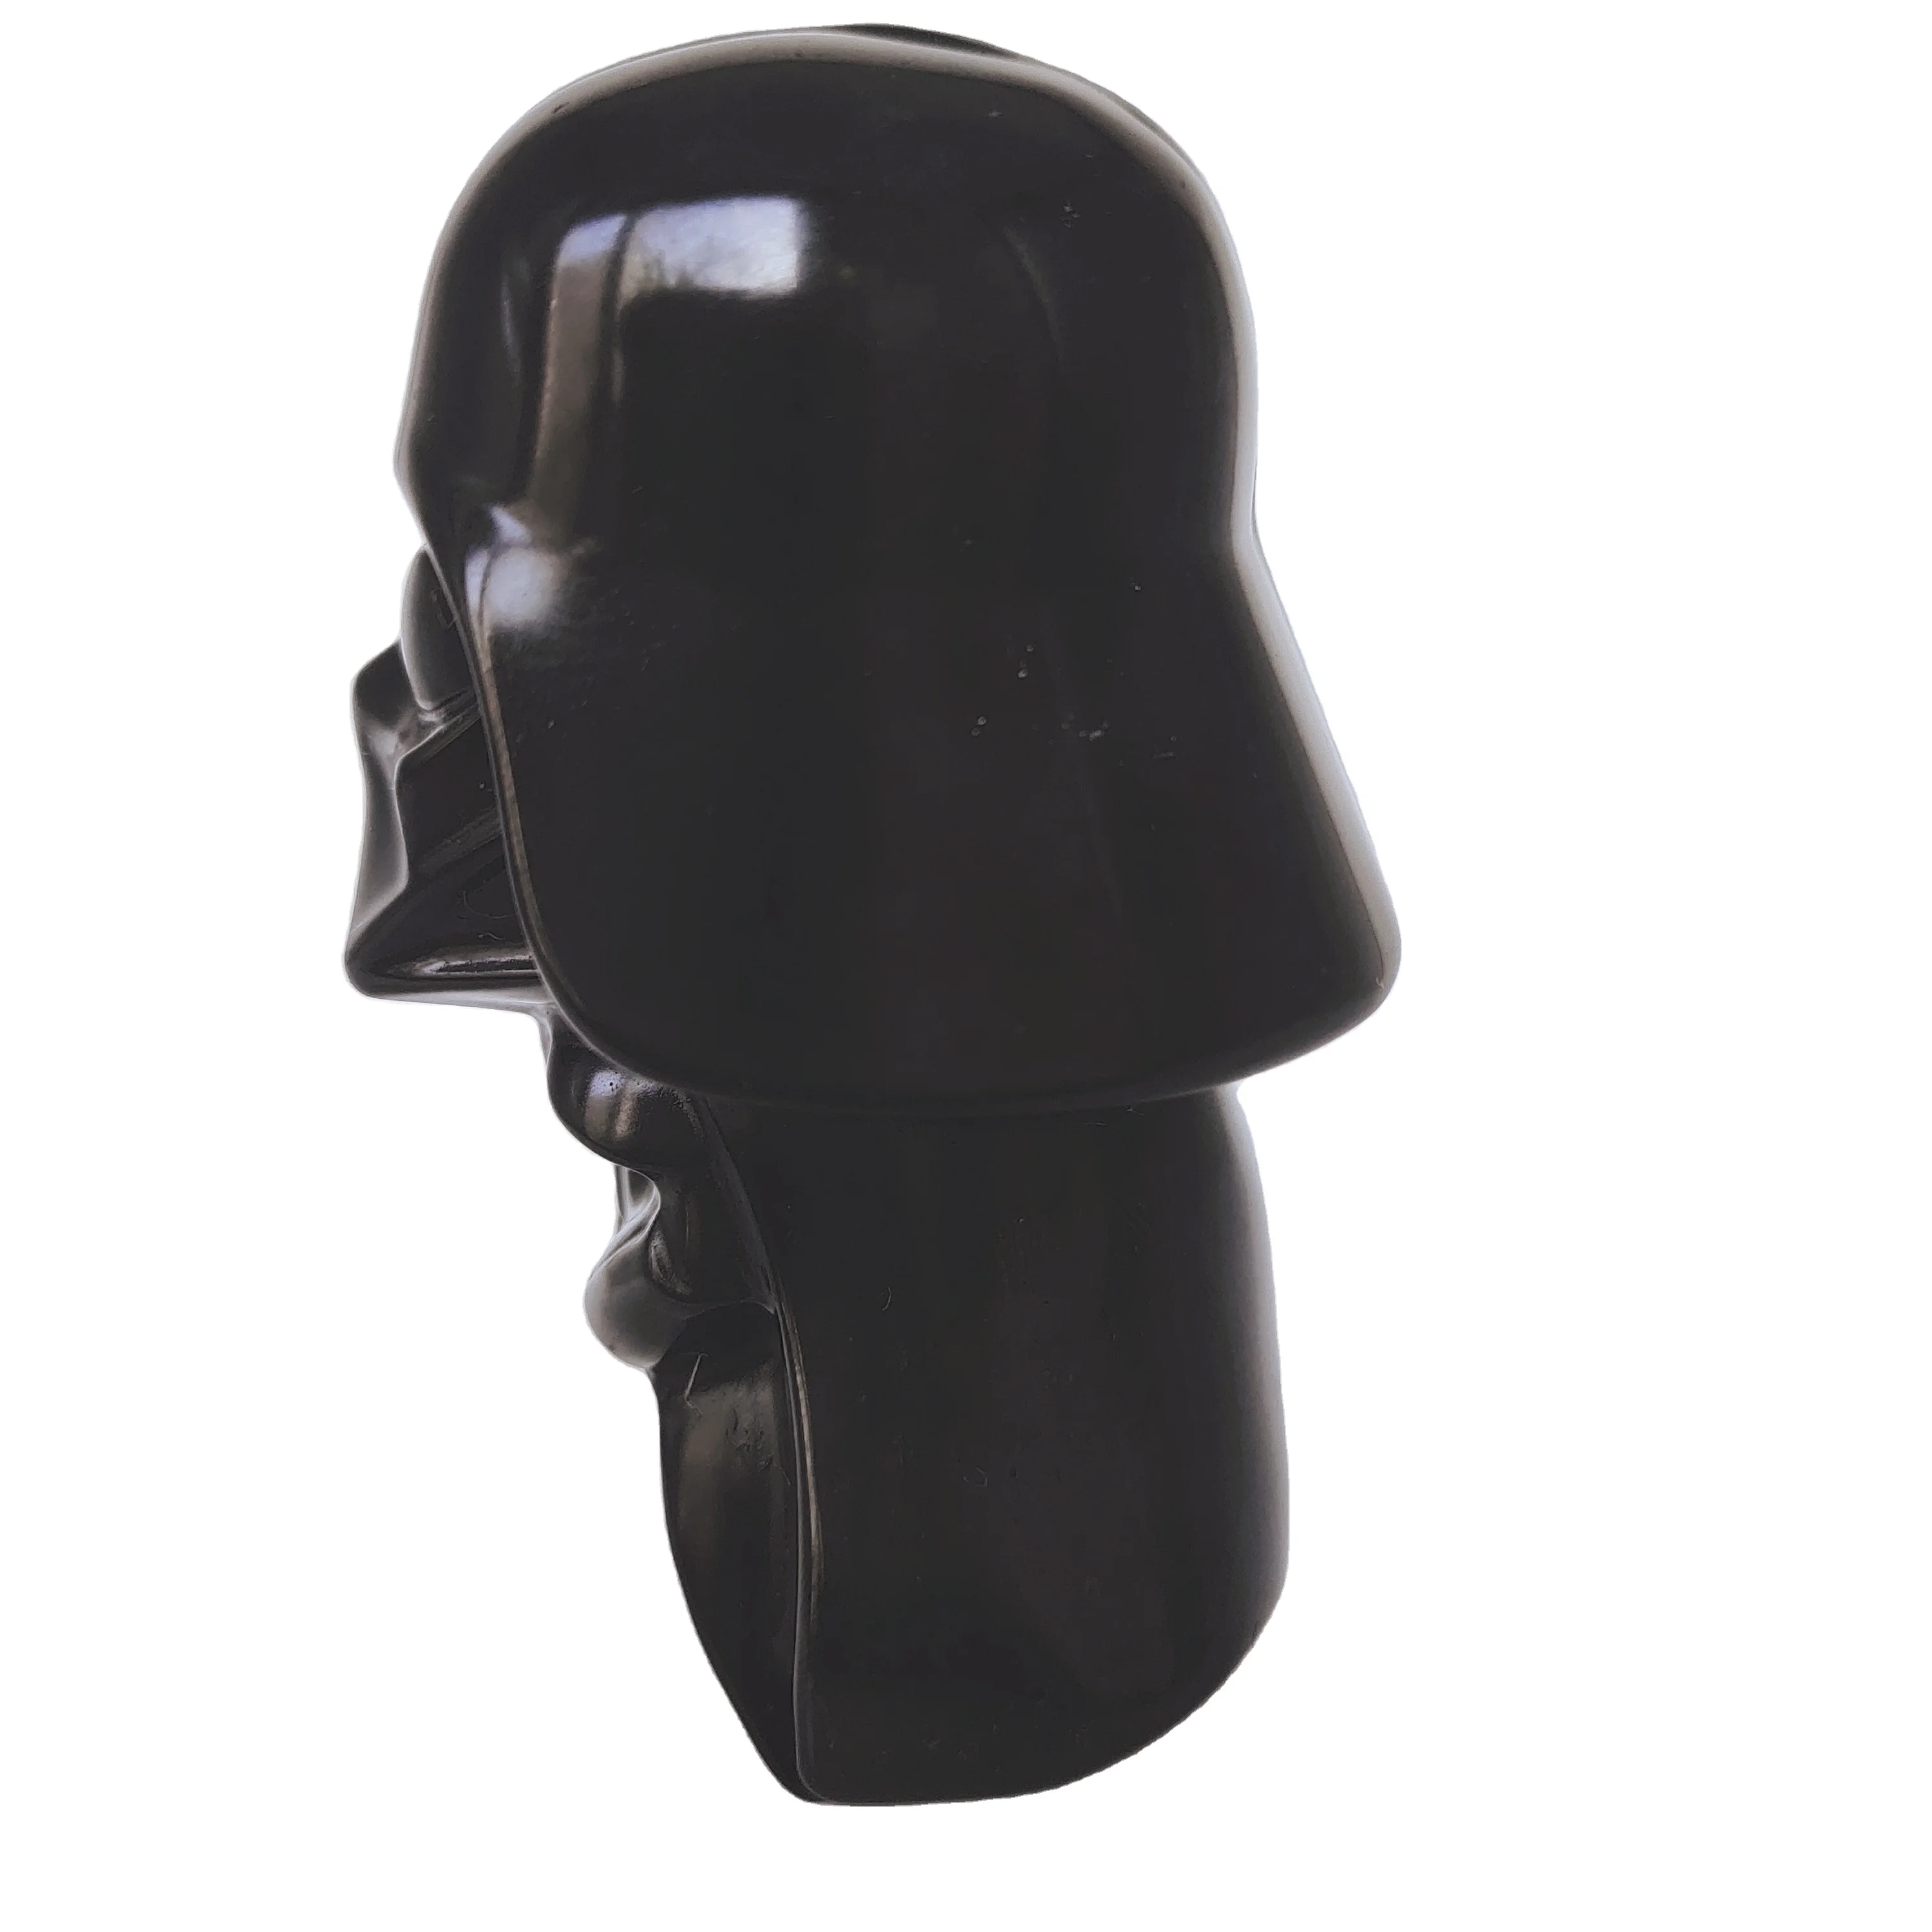 Star Wars Darth Vader Beer Mugs Black Warrior Head Cover Shape